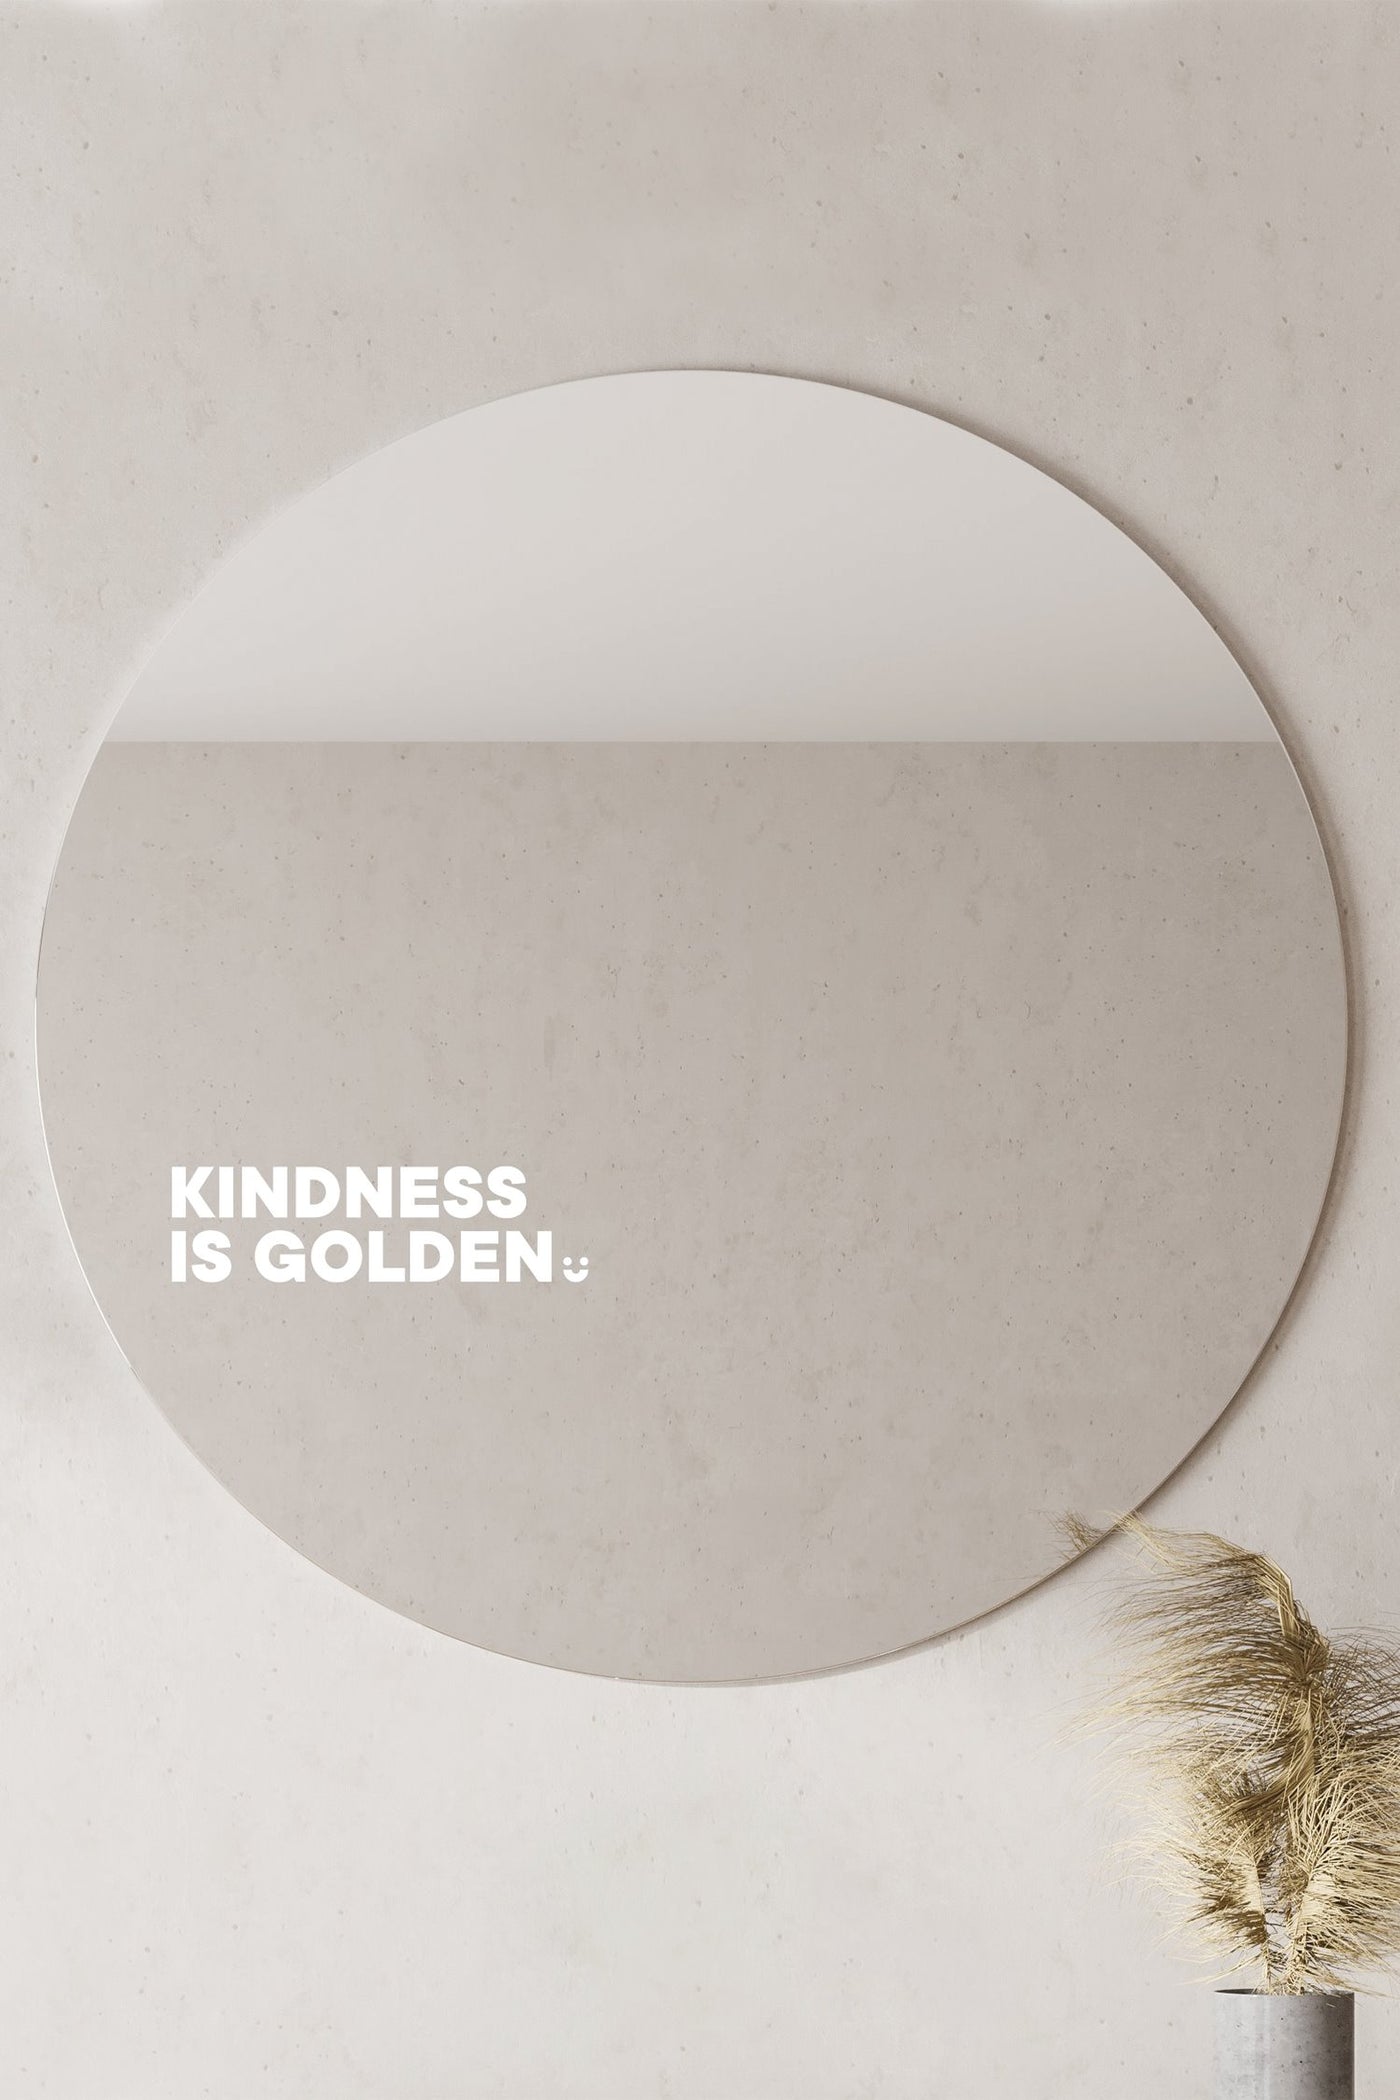 KINDNESS IS GOLDEN. - Affirmation Mirror Sticker Affirmation Stickers Selfawear 